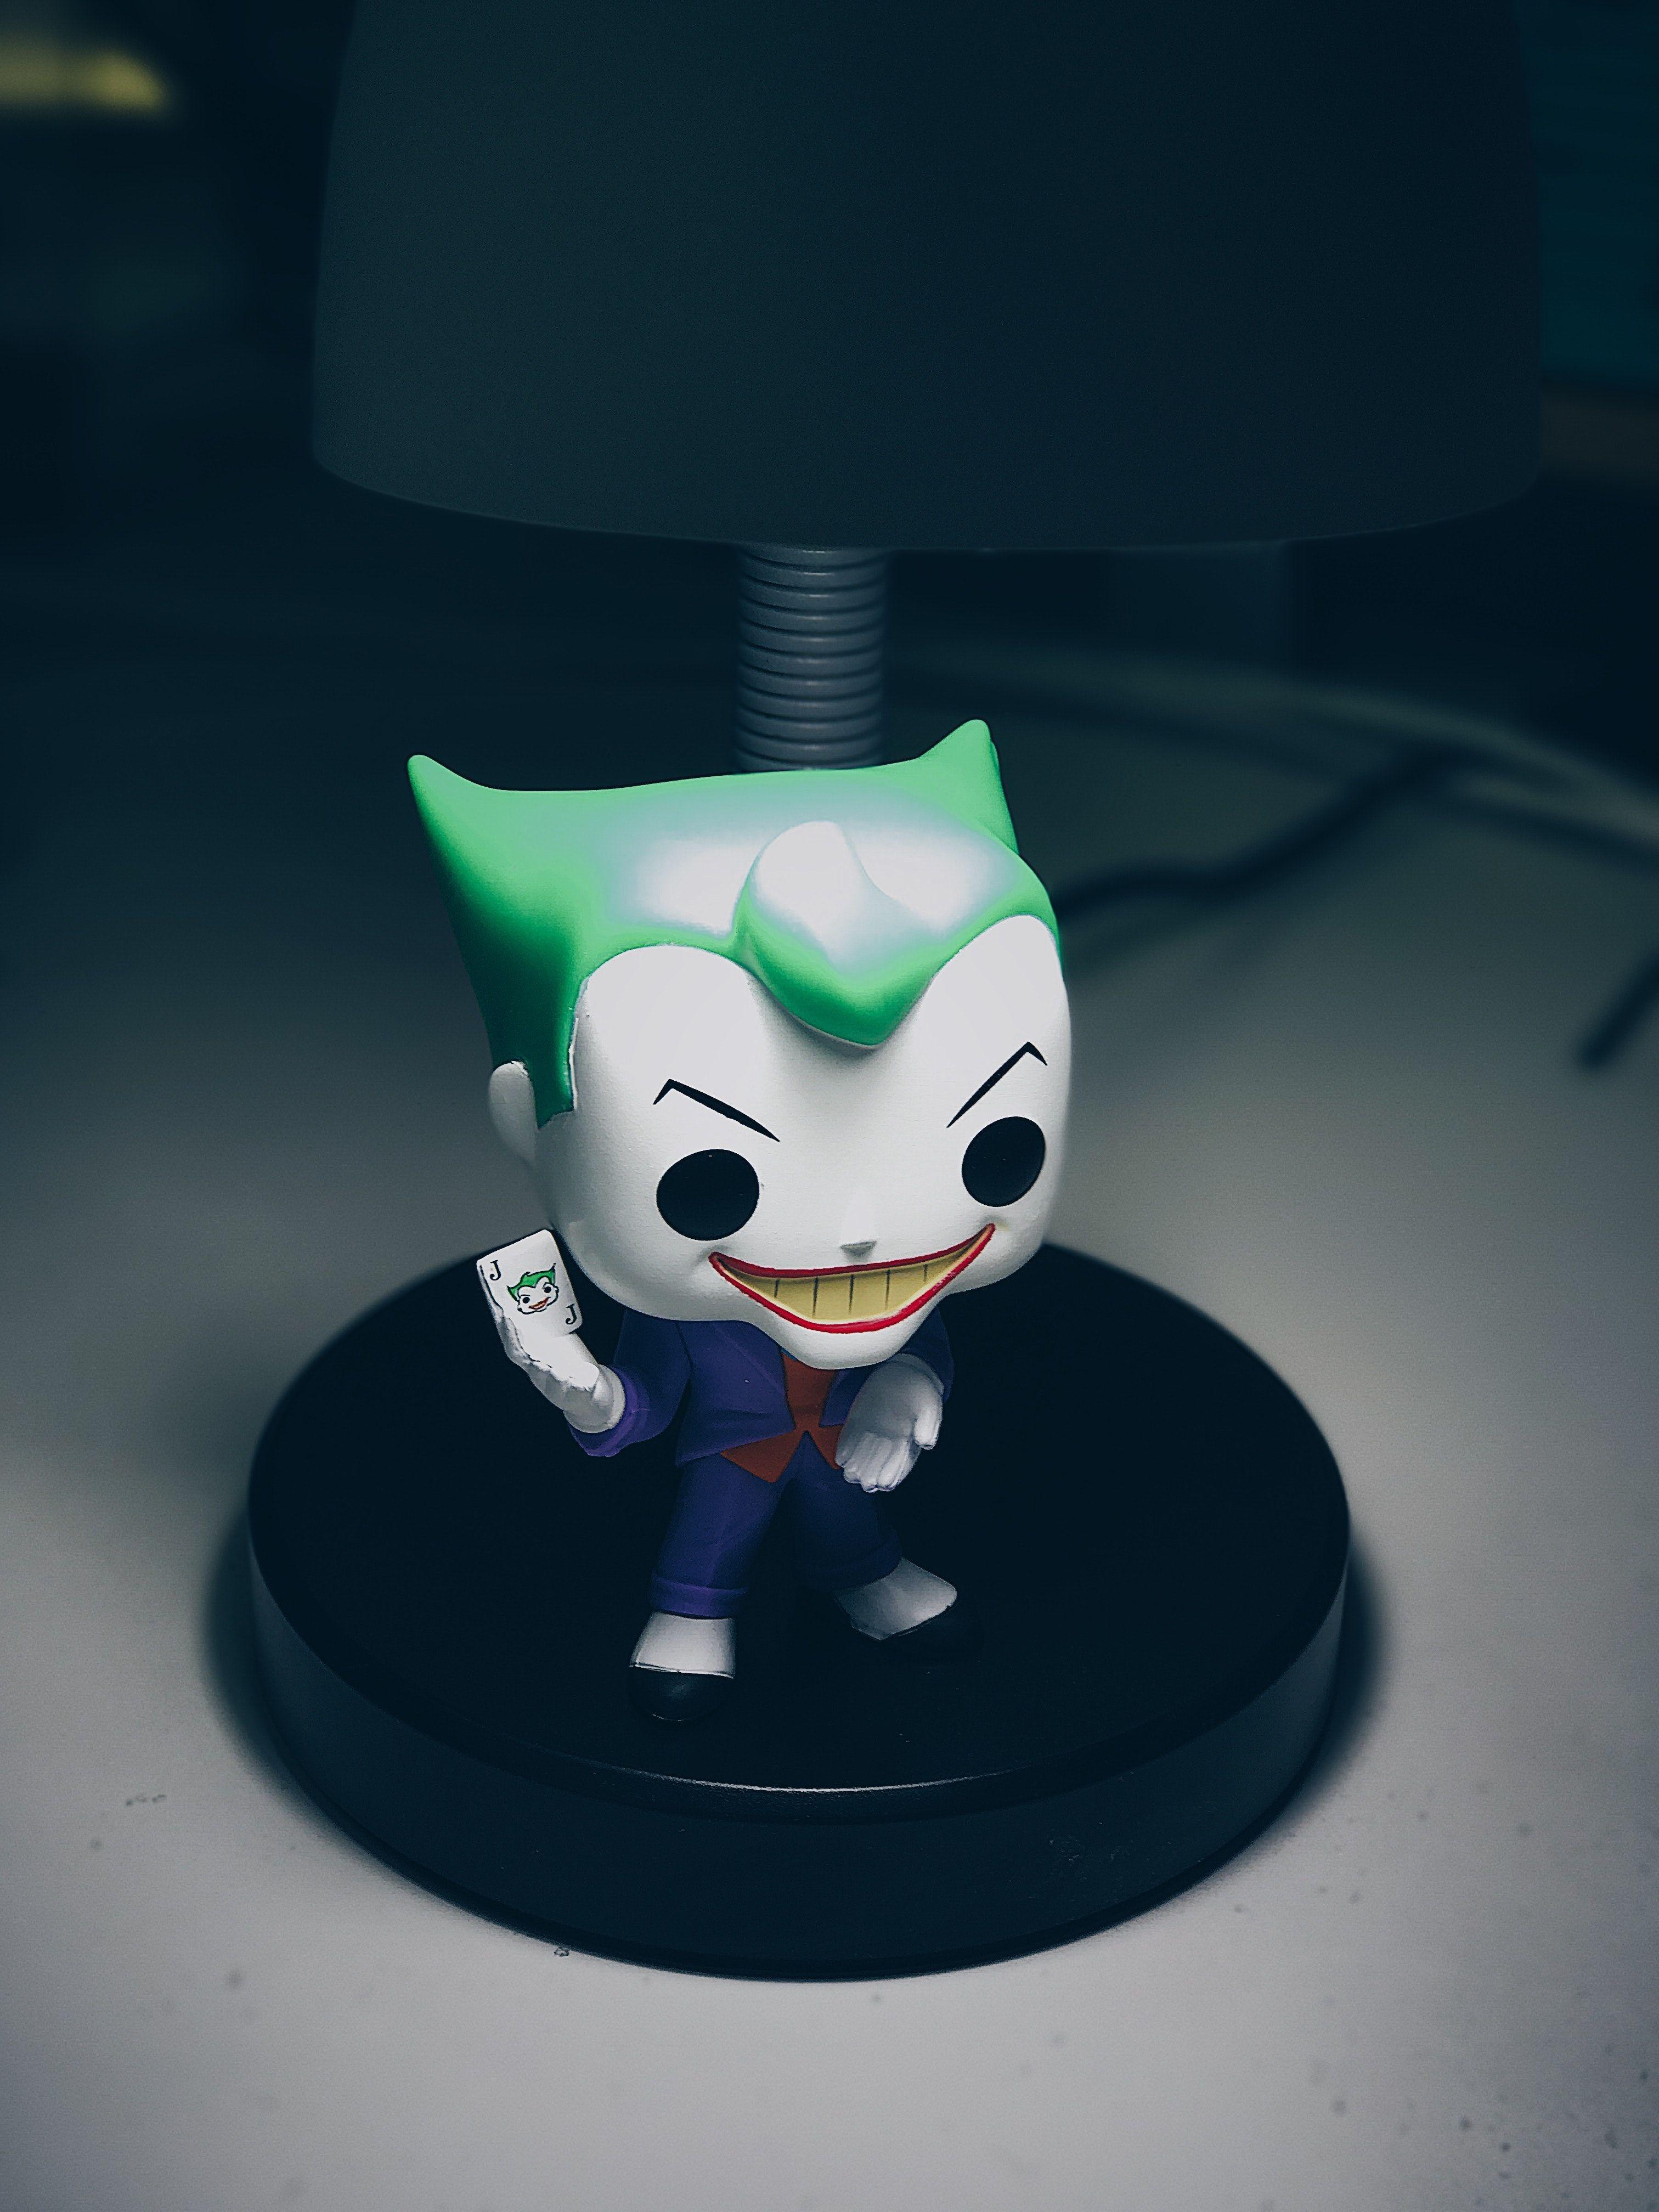 Free stock photo of Funko Pop, Joker, toy